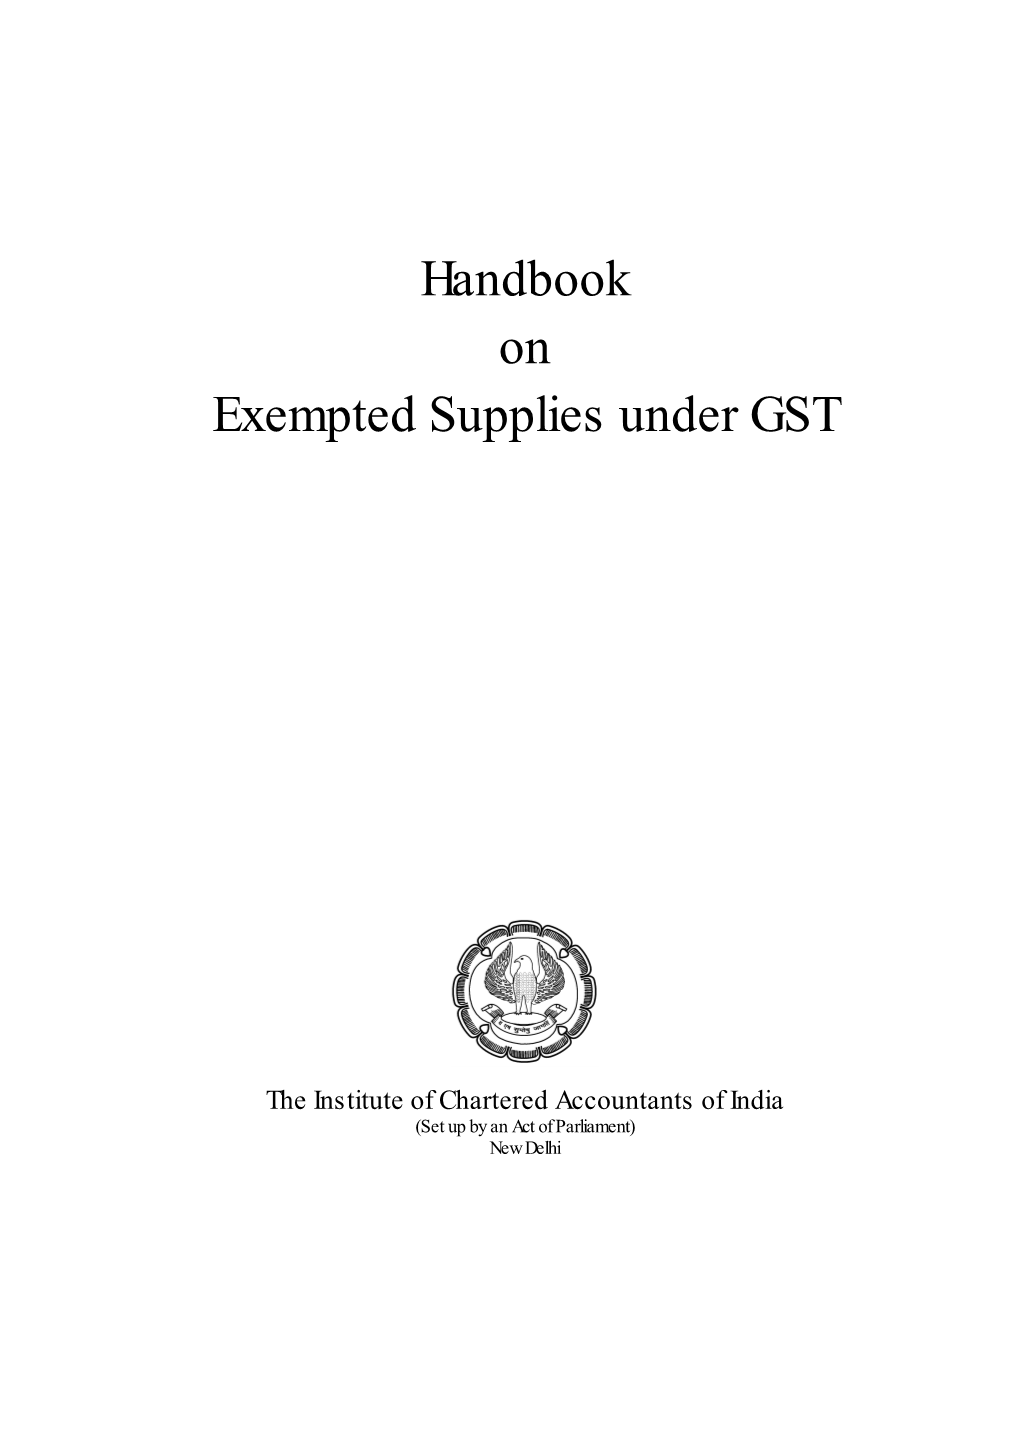 Handbook on Exempted Supplies Under GST